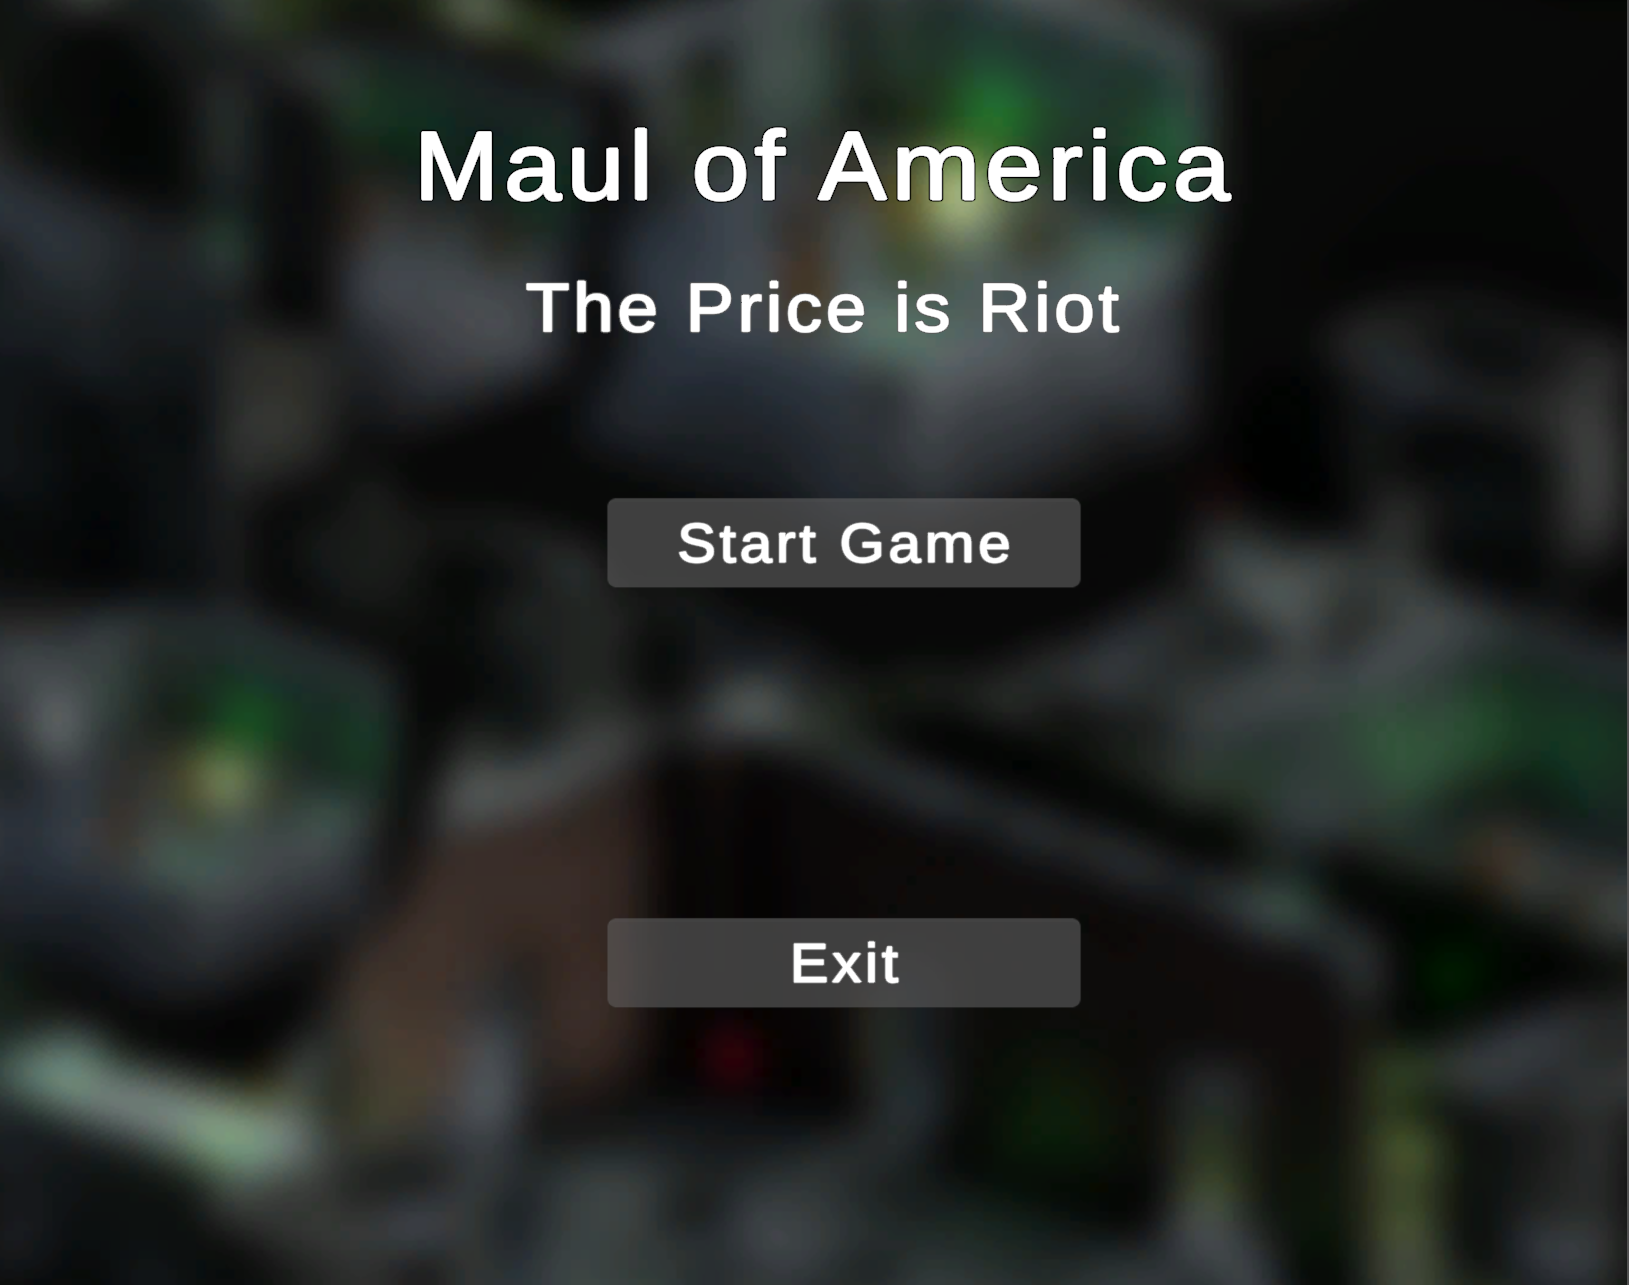 Sudden Attack - game screenshots at Riot Pixels, images